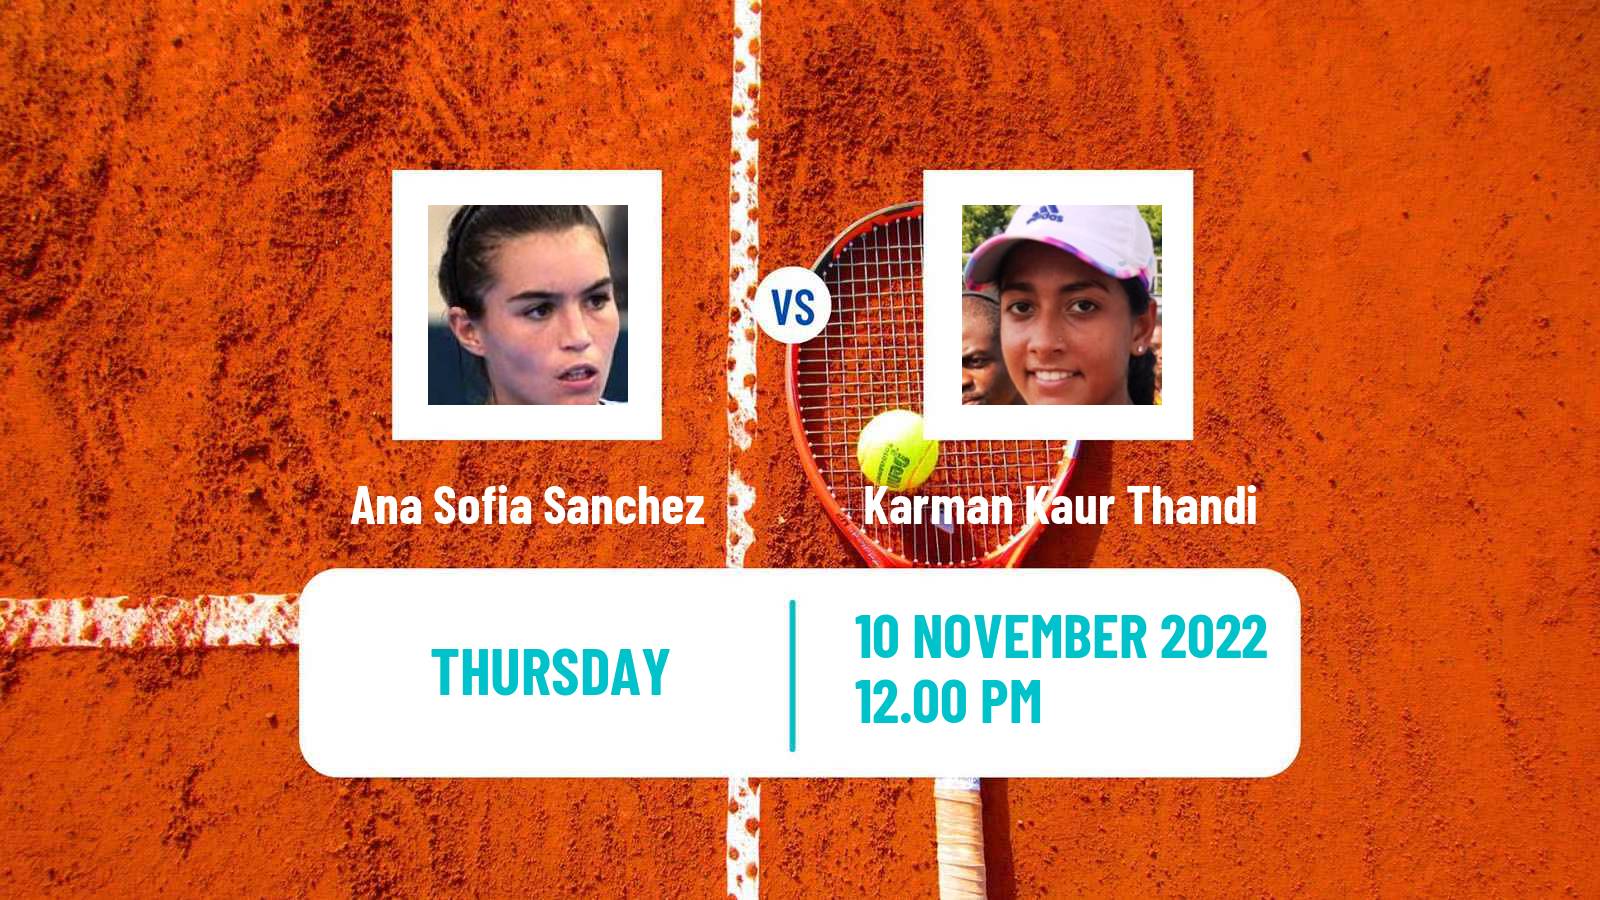 Tennis ITF Tournaments Ana Sofia Sanchez - Karman Kaur Thandi